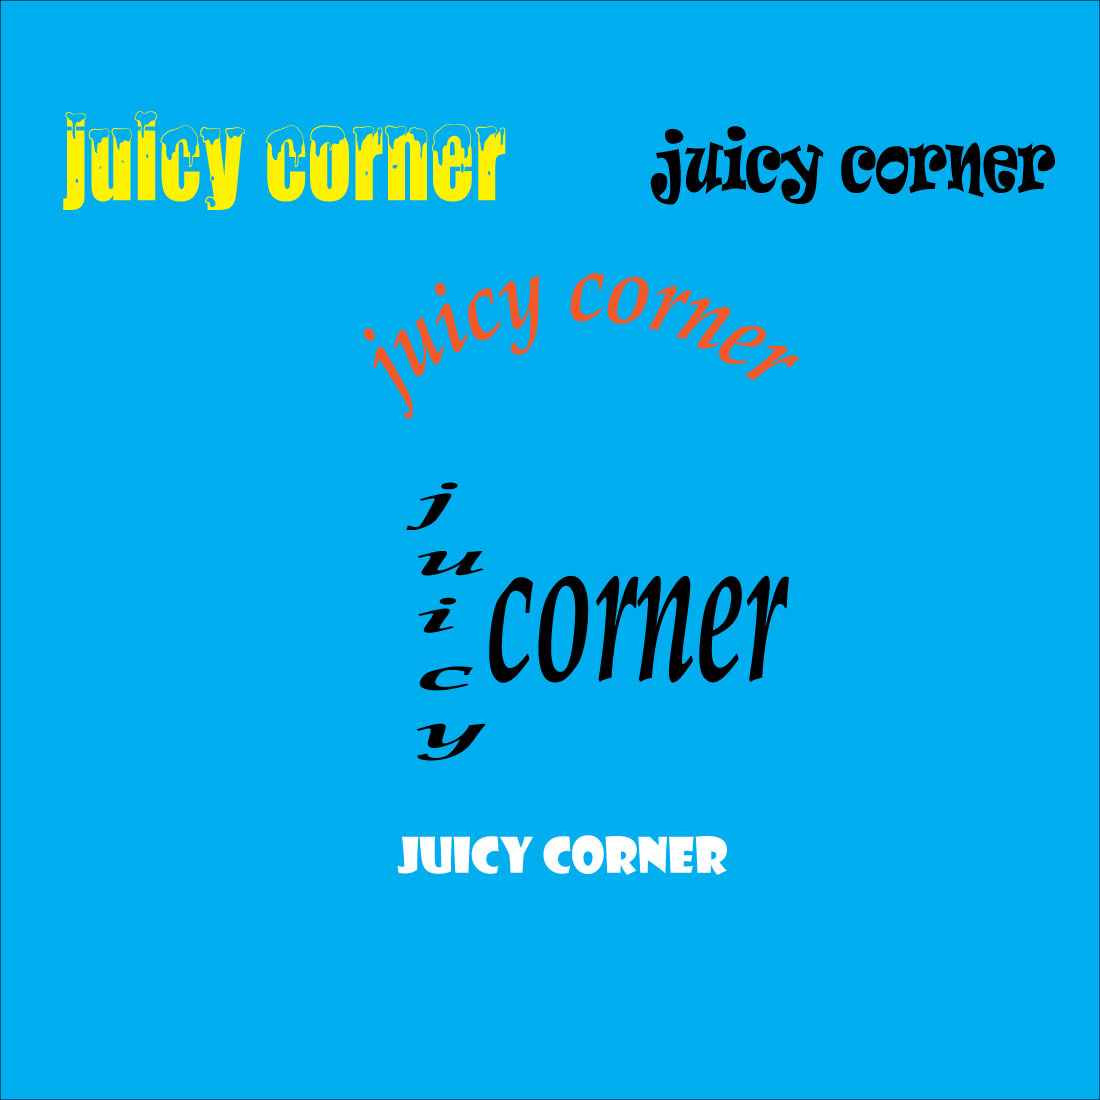 Juicy Corner Logos Design Bundle cover image.